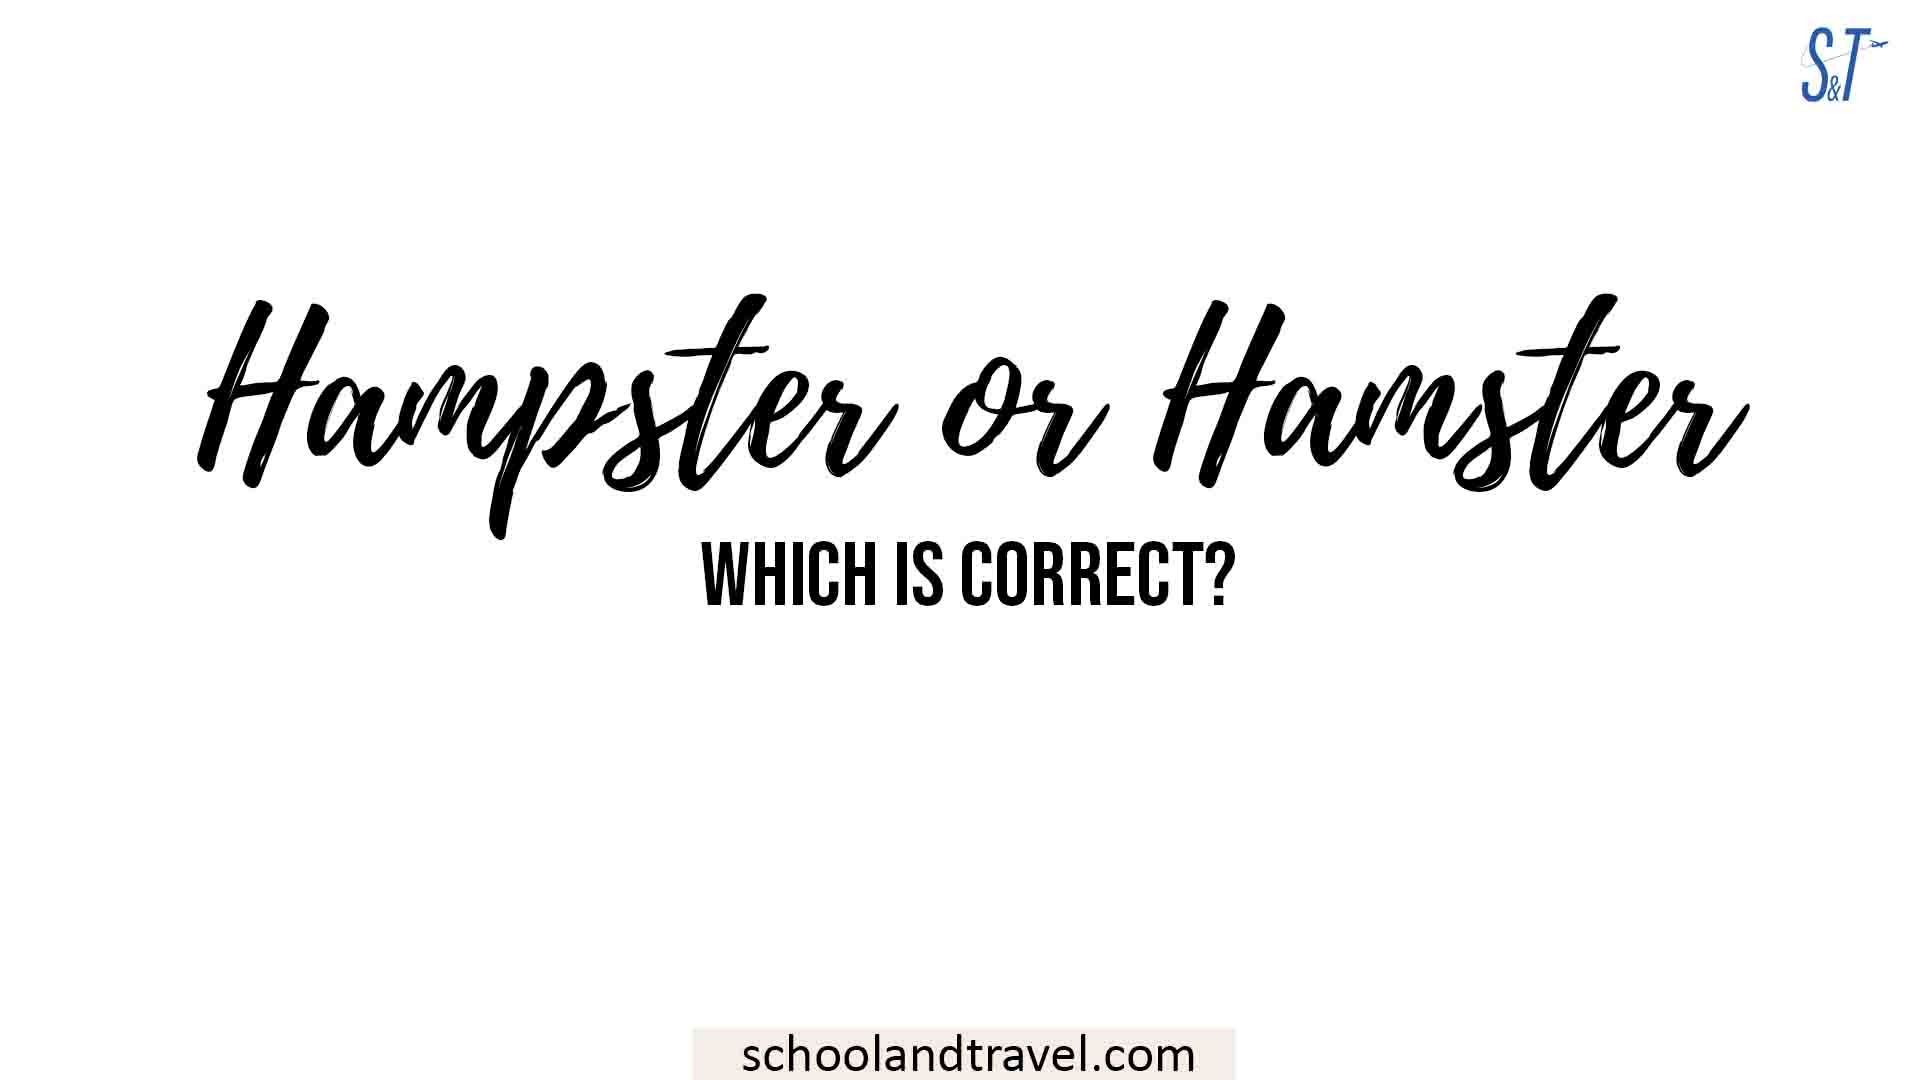 Hampster